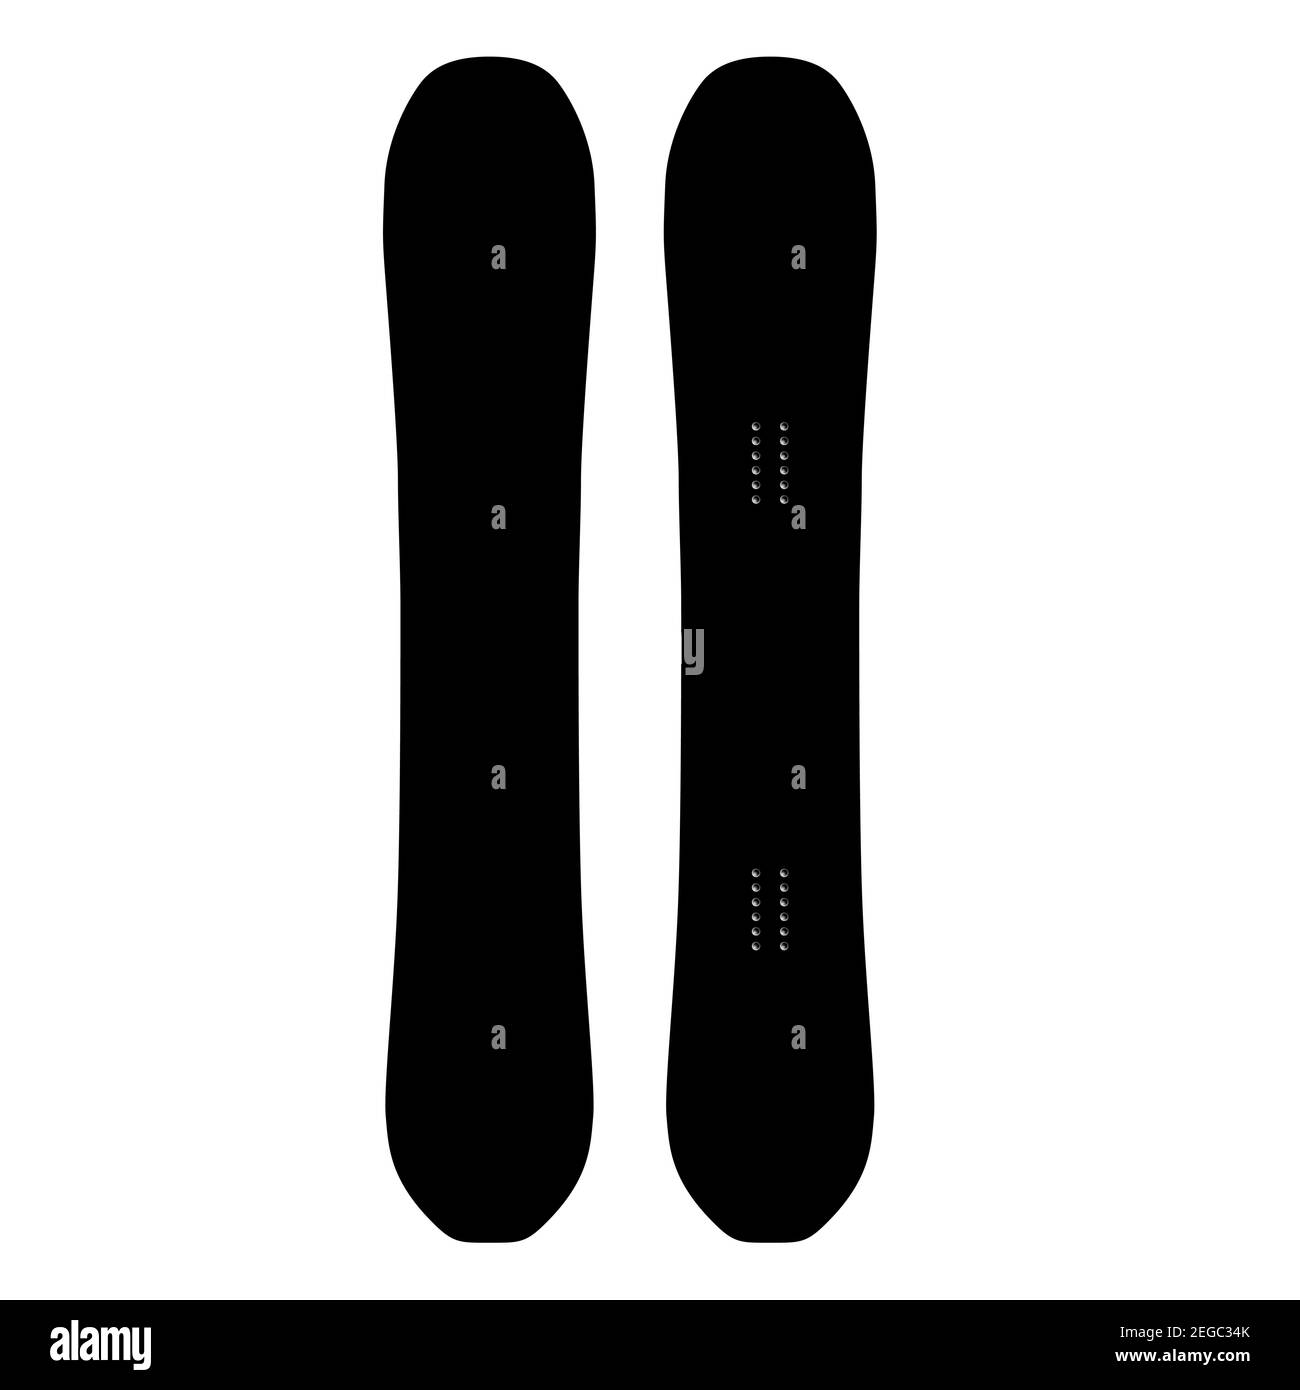 Snowboard black mockup. Realistic board deck design. Flat silhouette ...